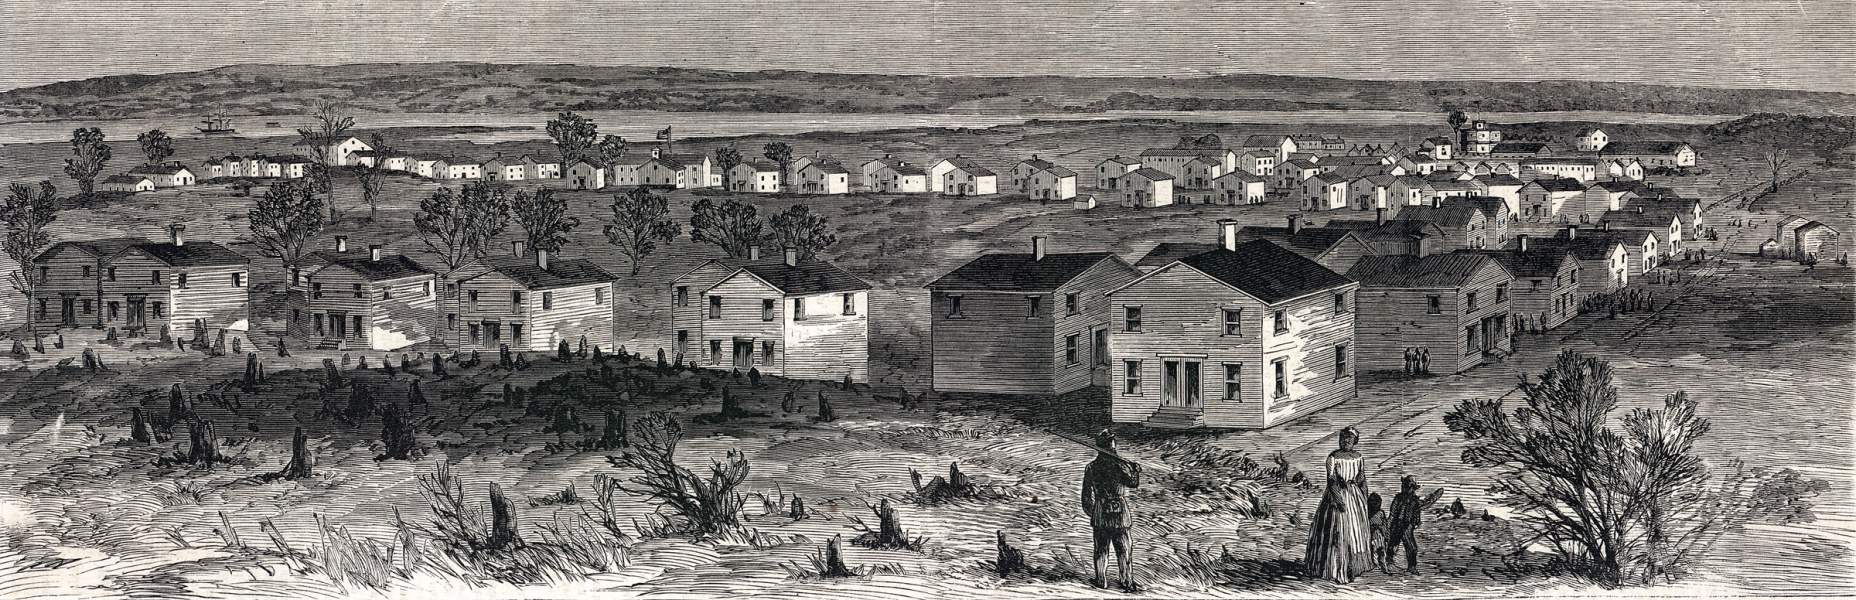 Freedmans' Village, Arlington, Virginia, May 1864, artist's impression, zoomable image